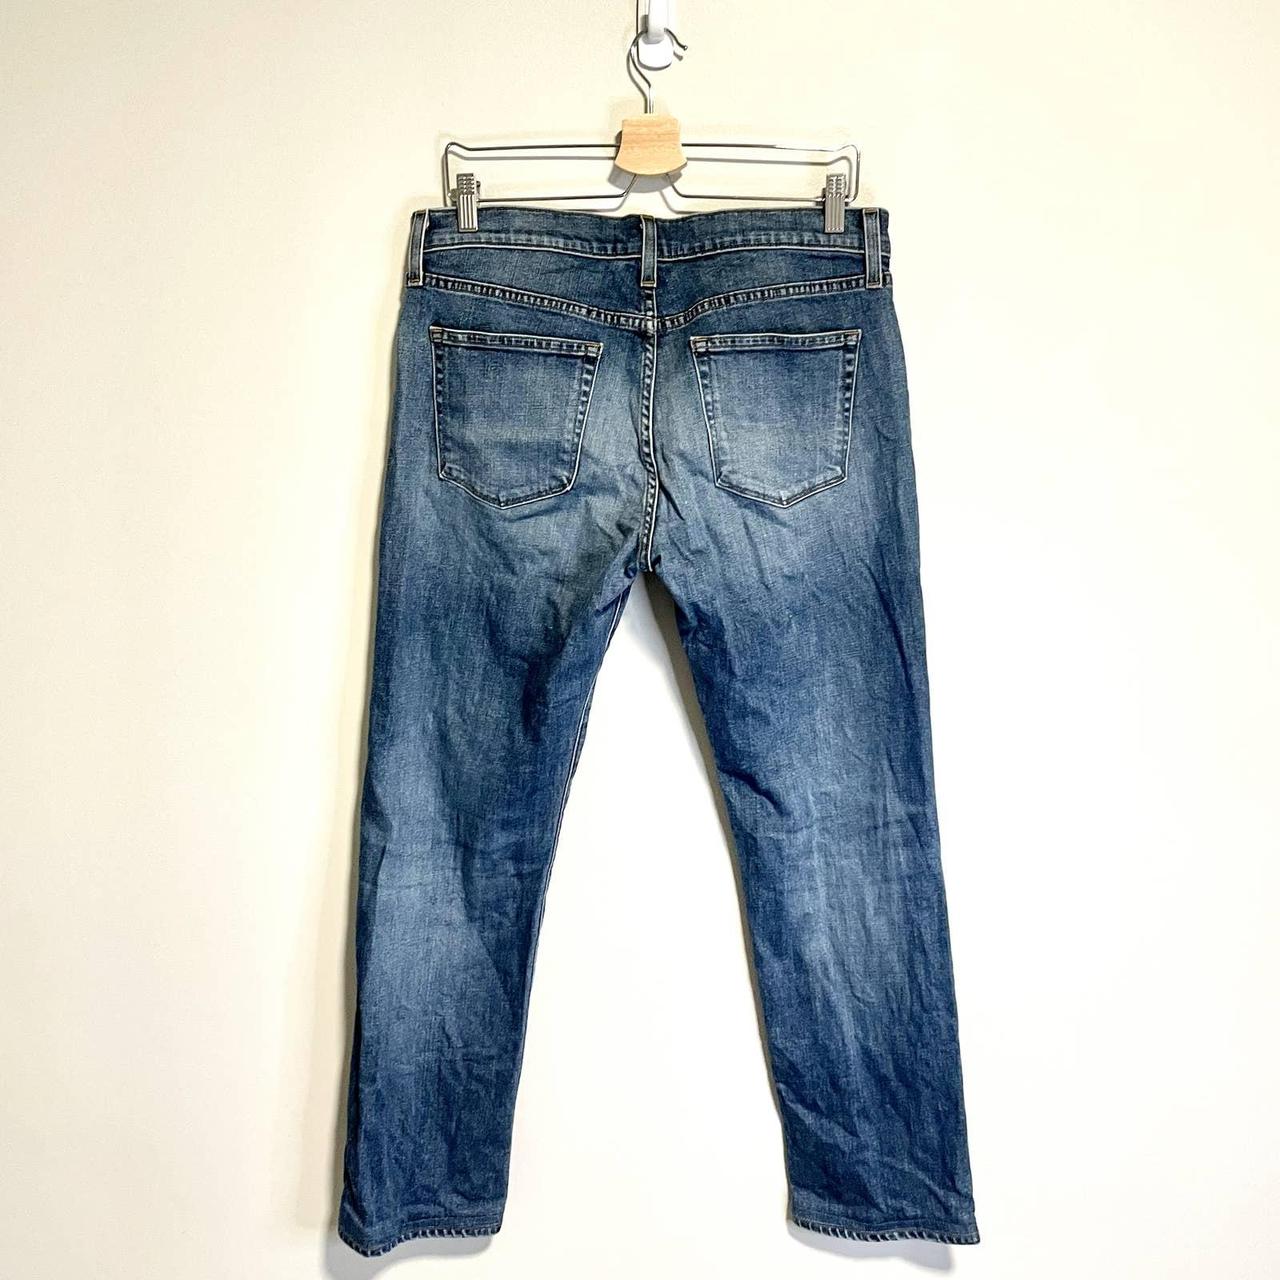 J BRAND Men's Kane Straight Fit Jeans Medium Wash - Depop